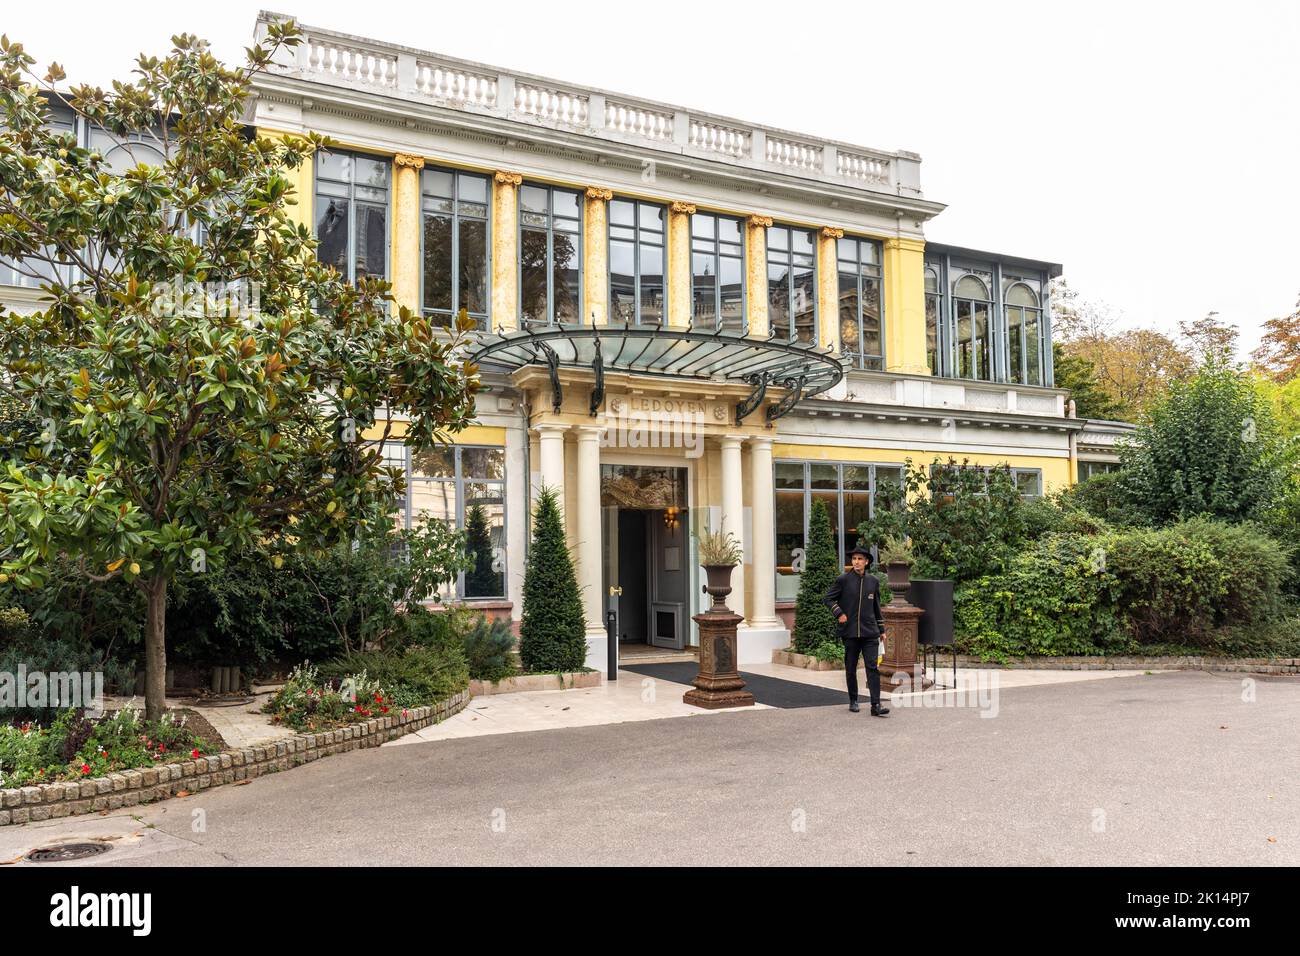 Pavillon Ledoyen a 3 Michelin star restaurant in the  Champs - Élysées gardens, Paris, France. Stock Photo